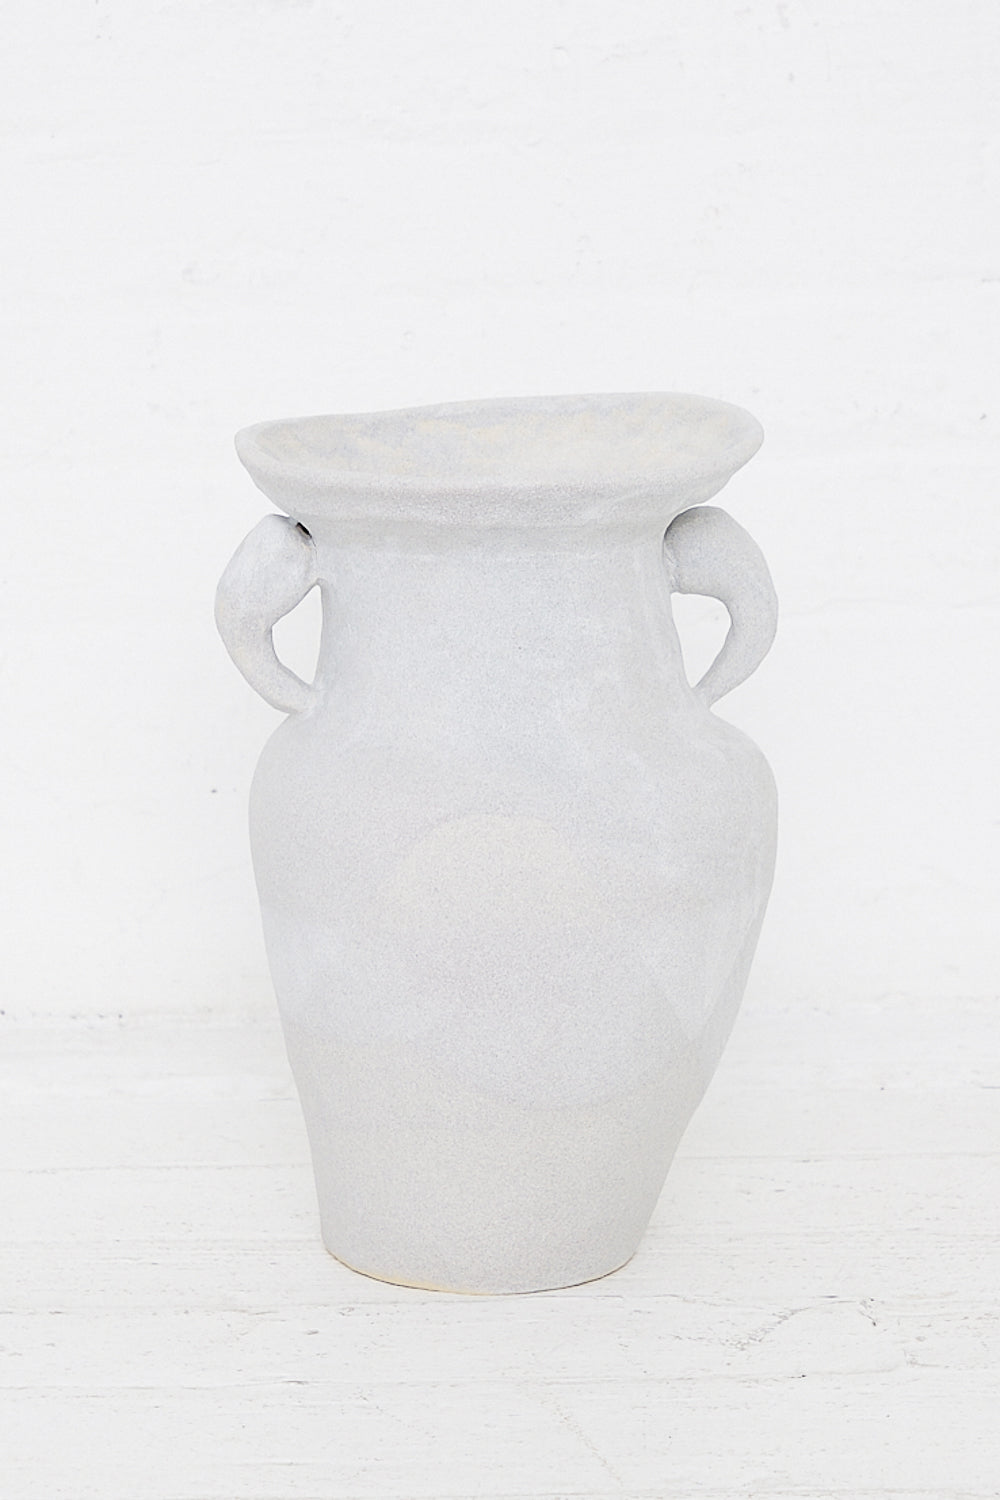 ANK Ceramics - Urn Vessel in White